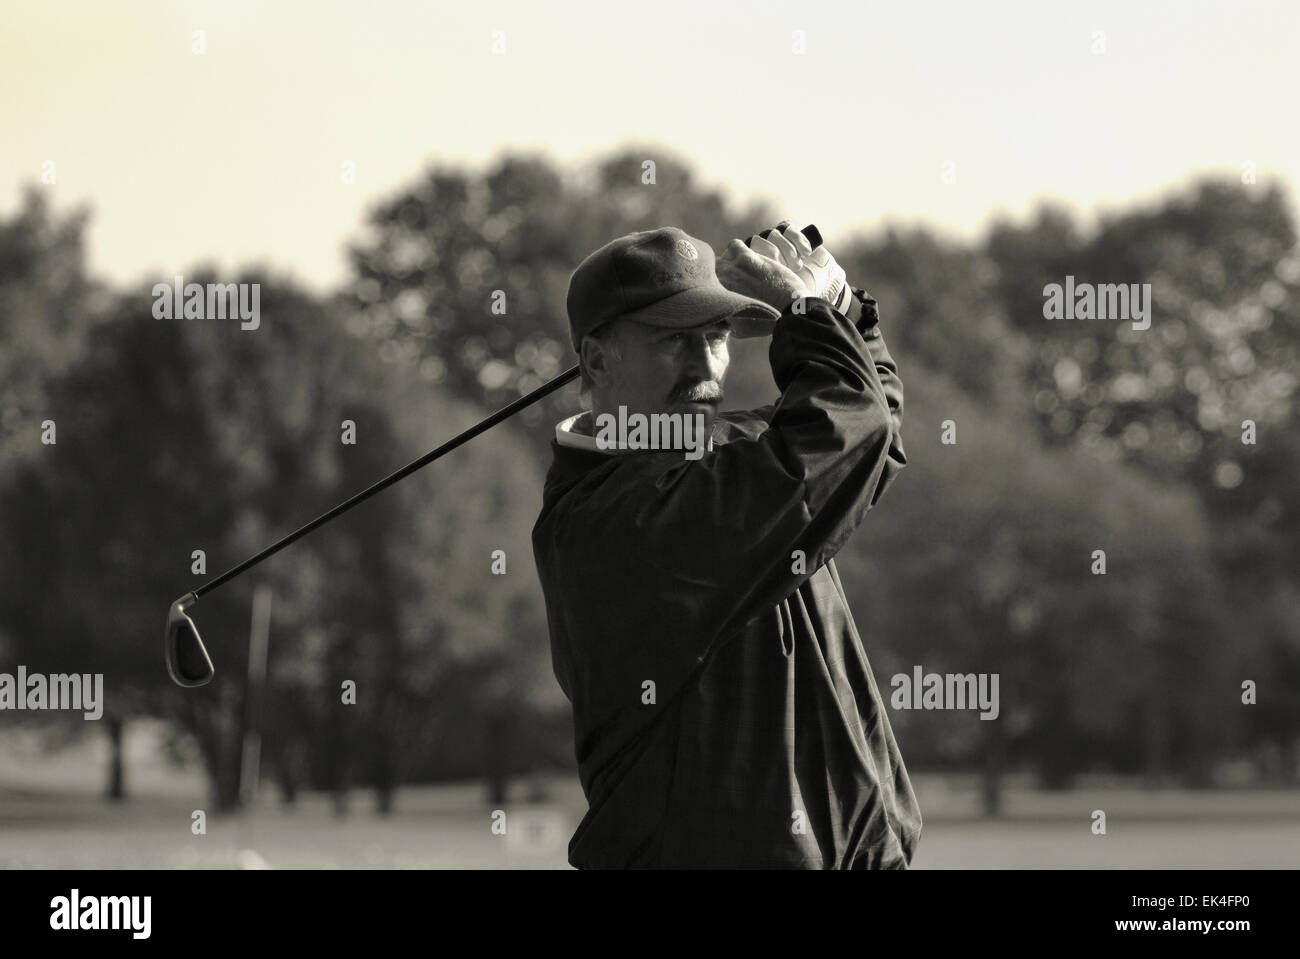 Italia, Roma Olgiata Golf Center, hombre jugando al golf Foto de stock